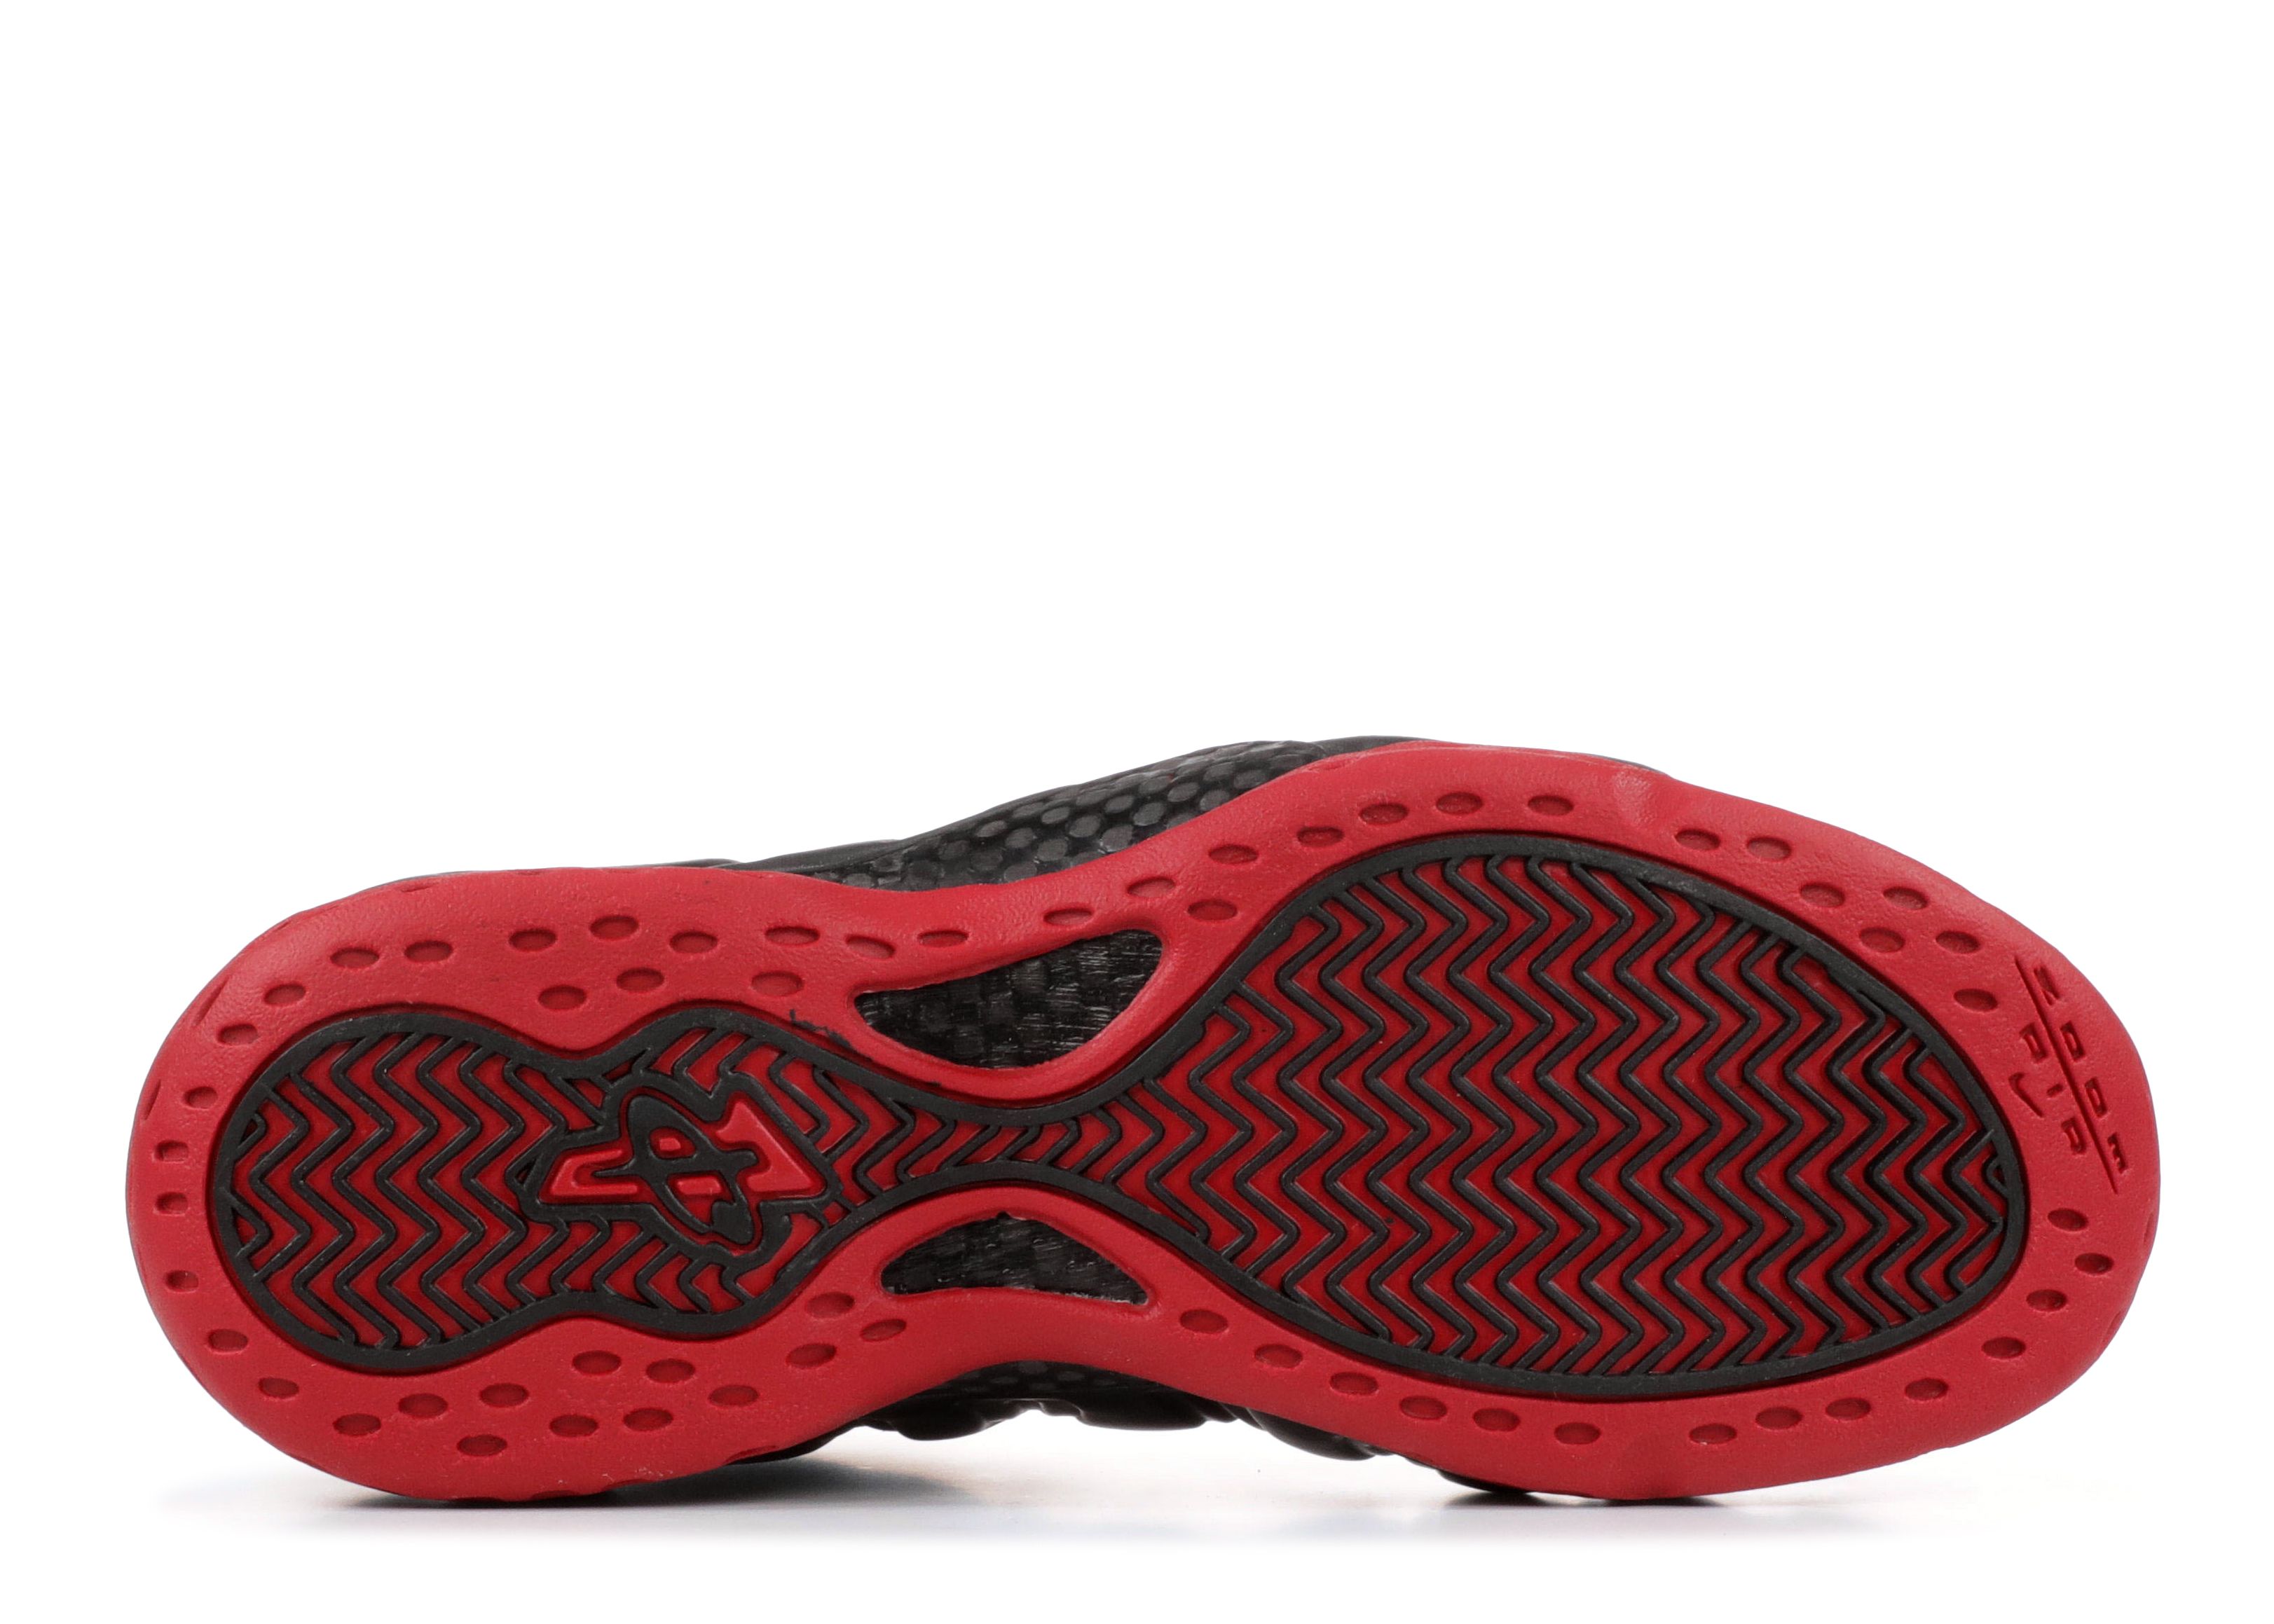 WDYWT] Nike Air Foamposite One Cough Drop : r/Sneakers